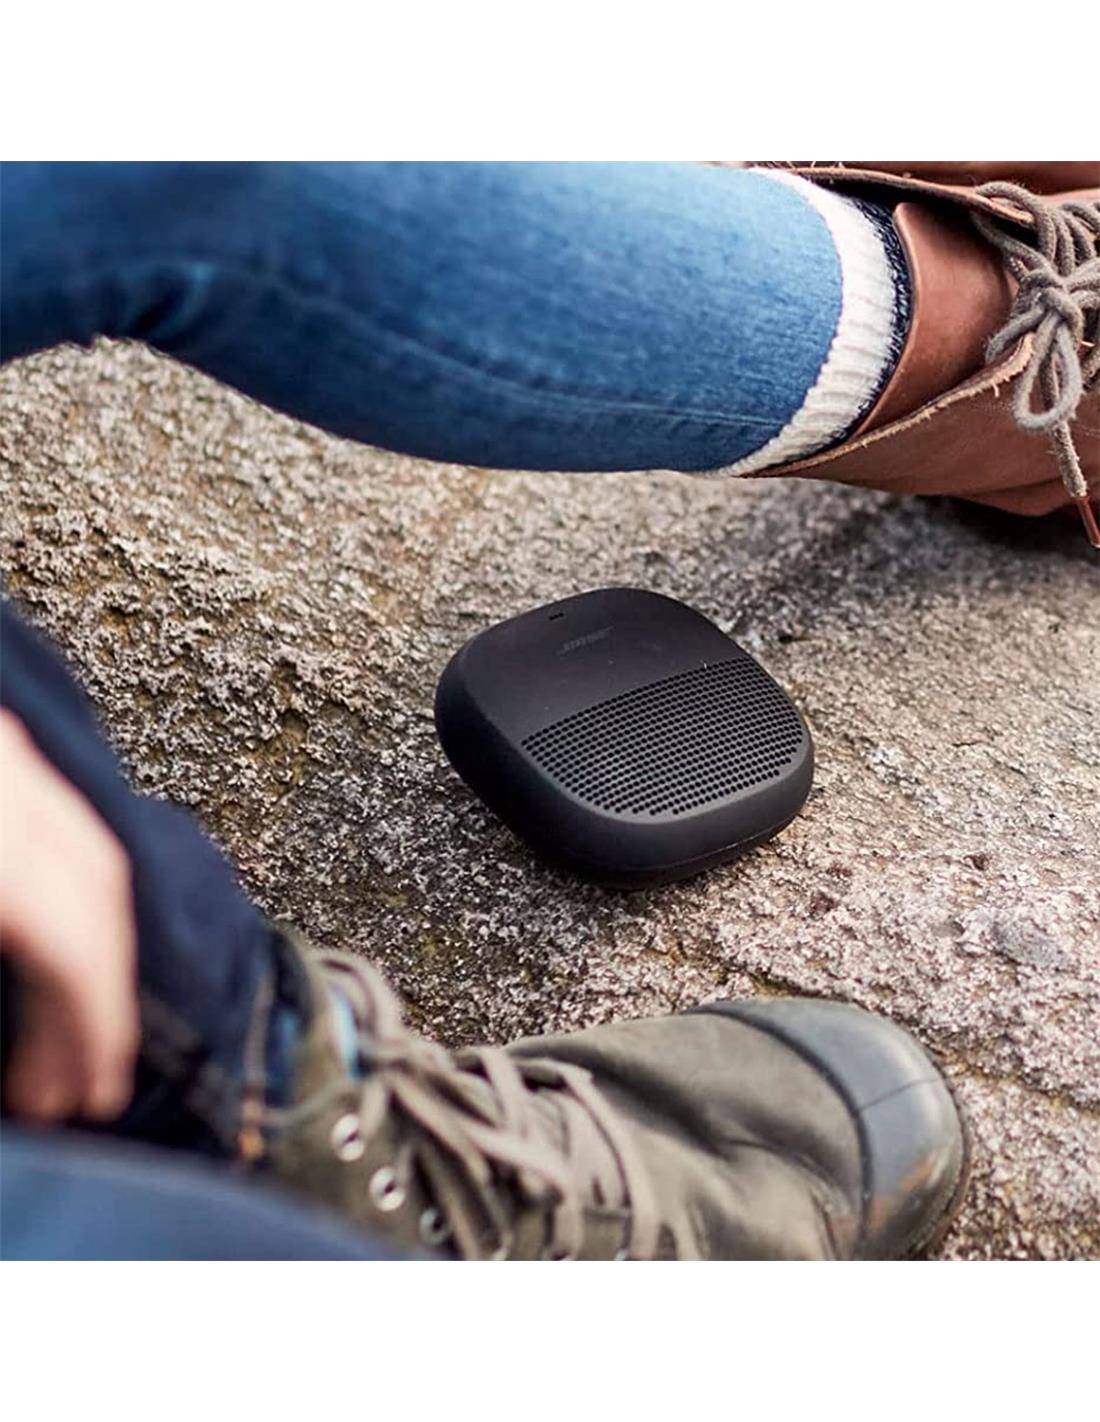 Bose SoundLink Micro - Altavoz Bluetooth Resistente al Agua, Negro